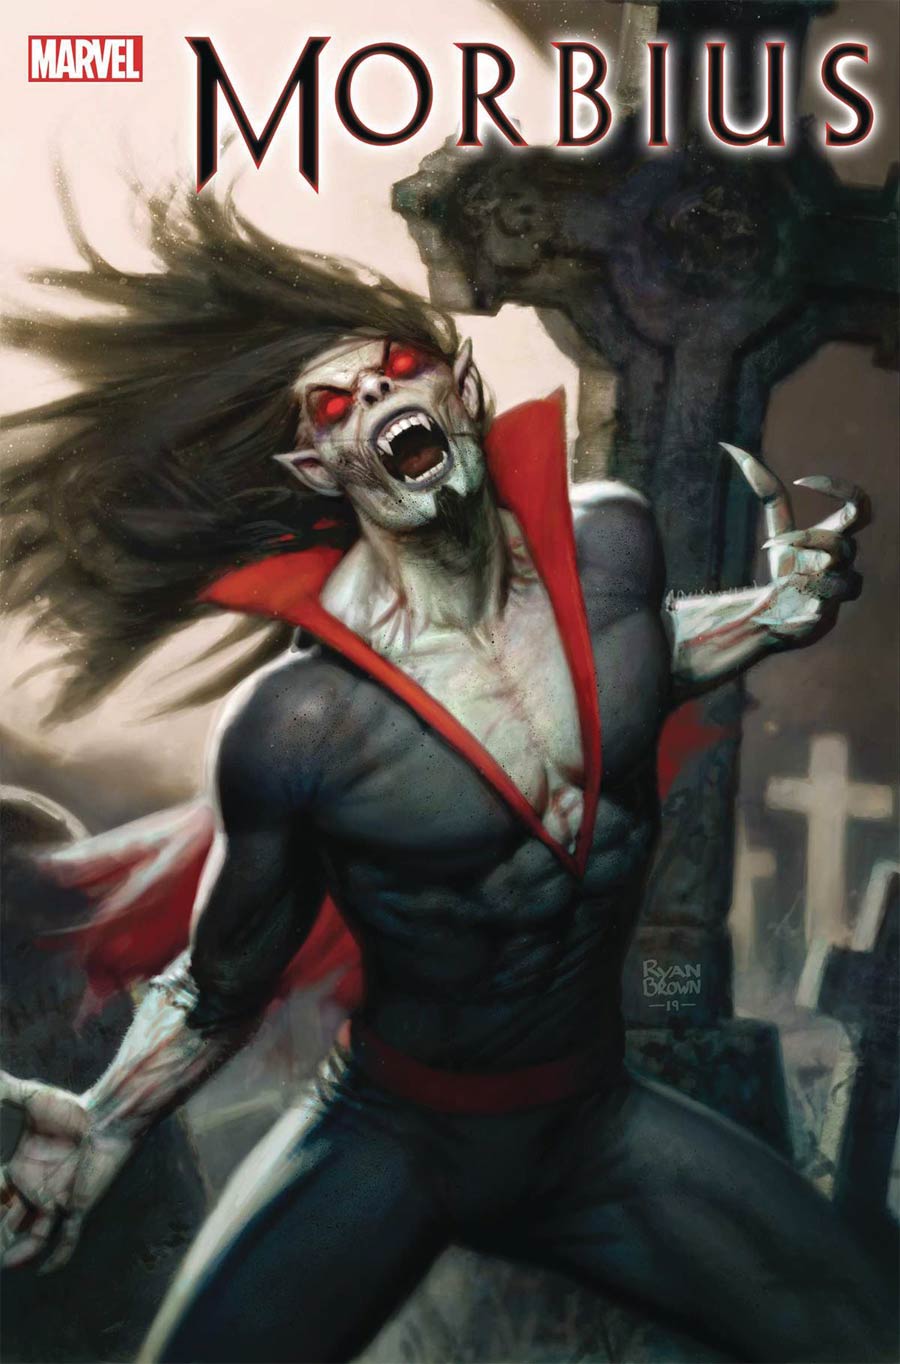 Morbius #1 By Ryan Brown Poster